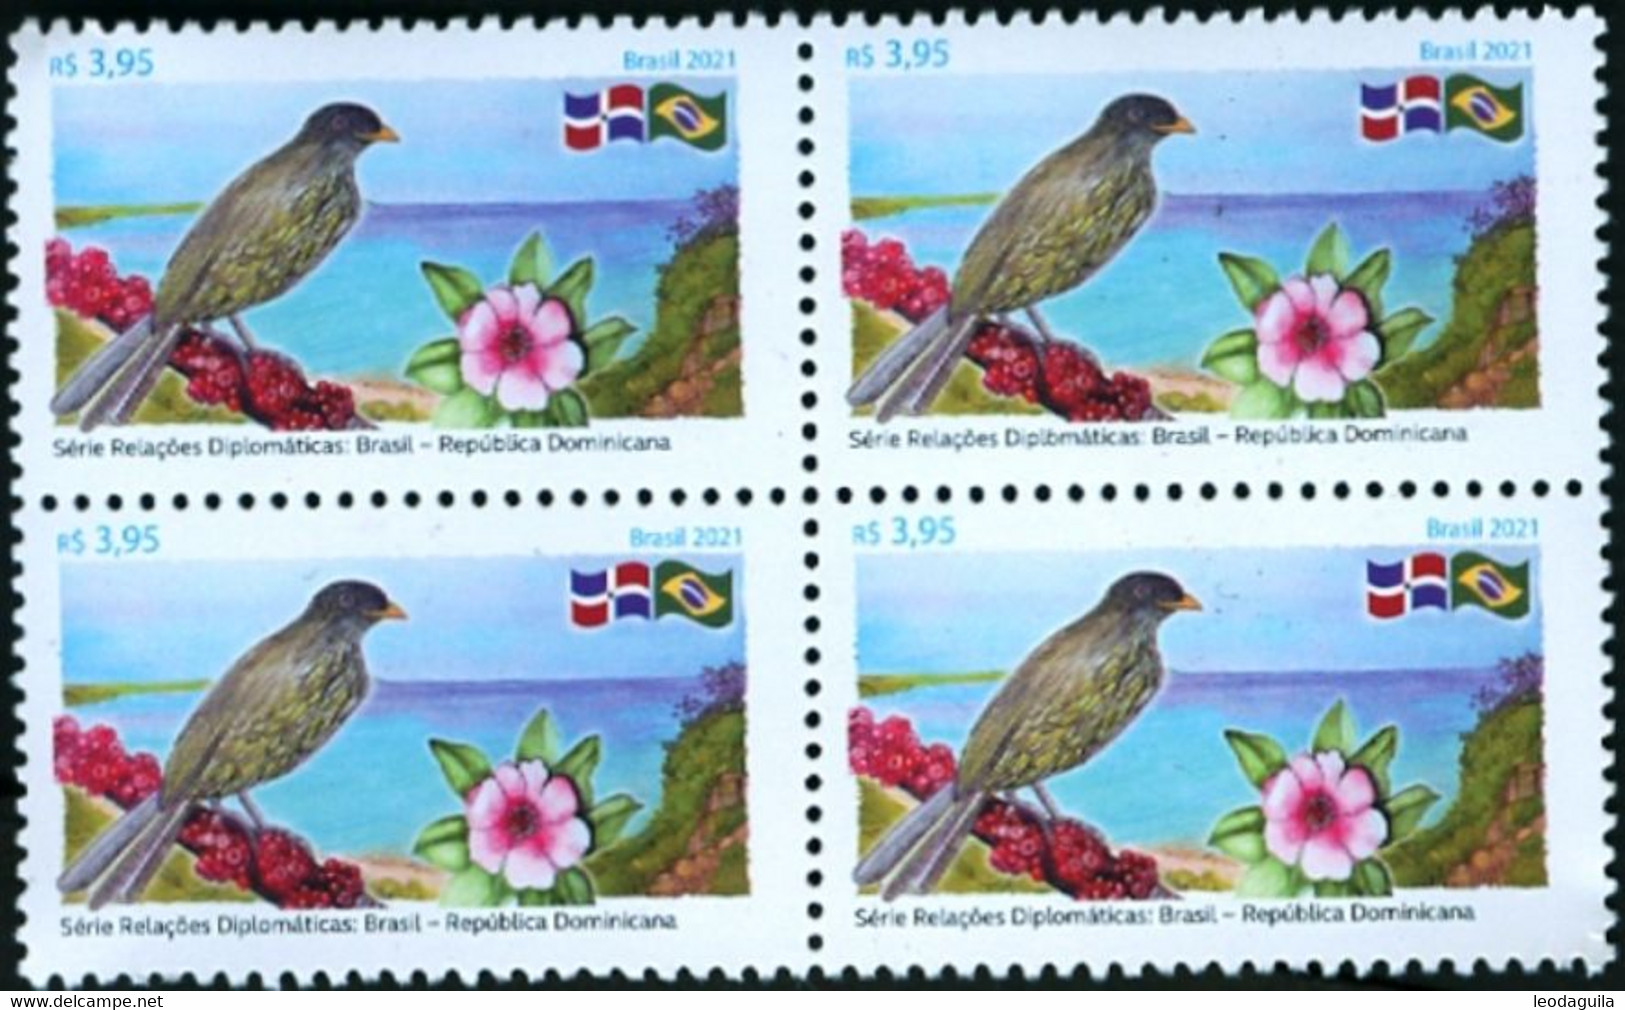 BRAZIL #4816 - BIRD PALMCHAT / CIGUA PALMERA  - LANDSCAPE - FLOWER  - BLOCK OF 4  - 2021 - MINT - Neufs